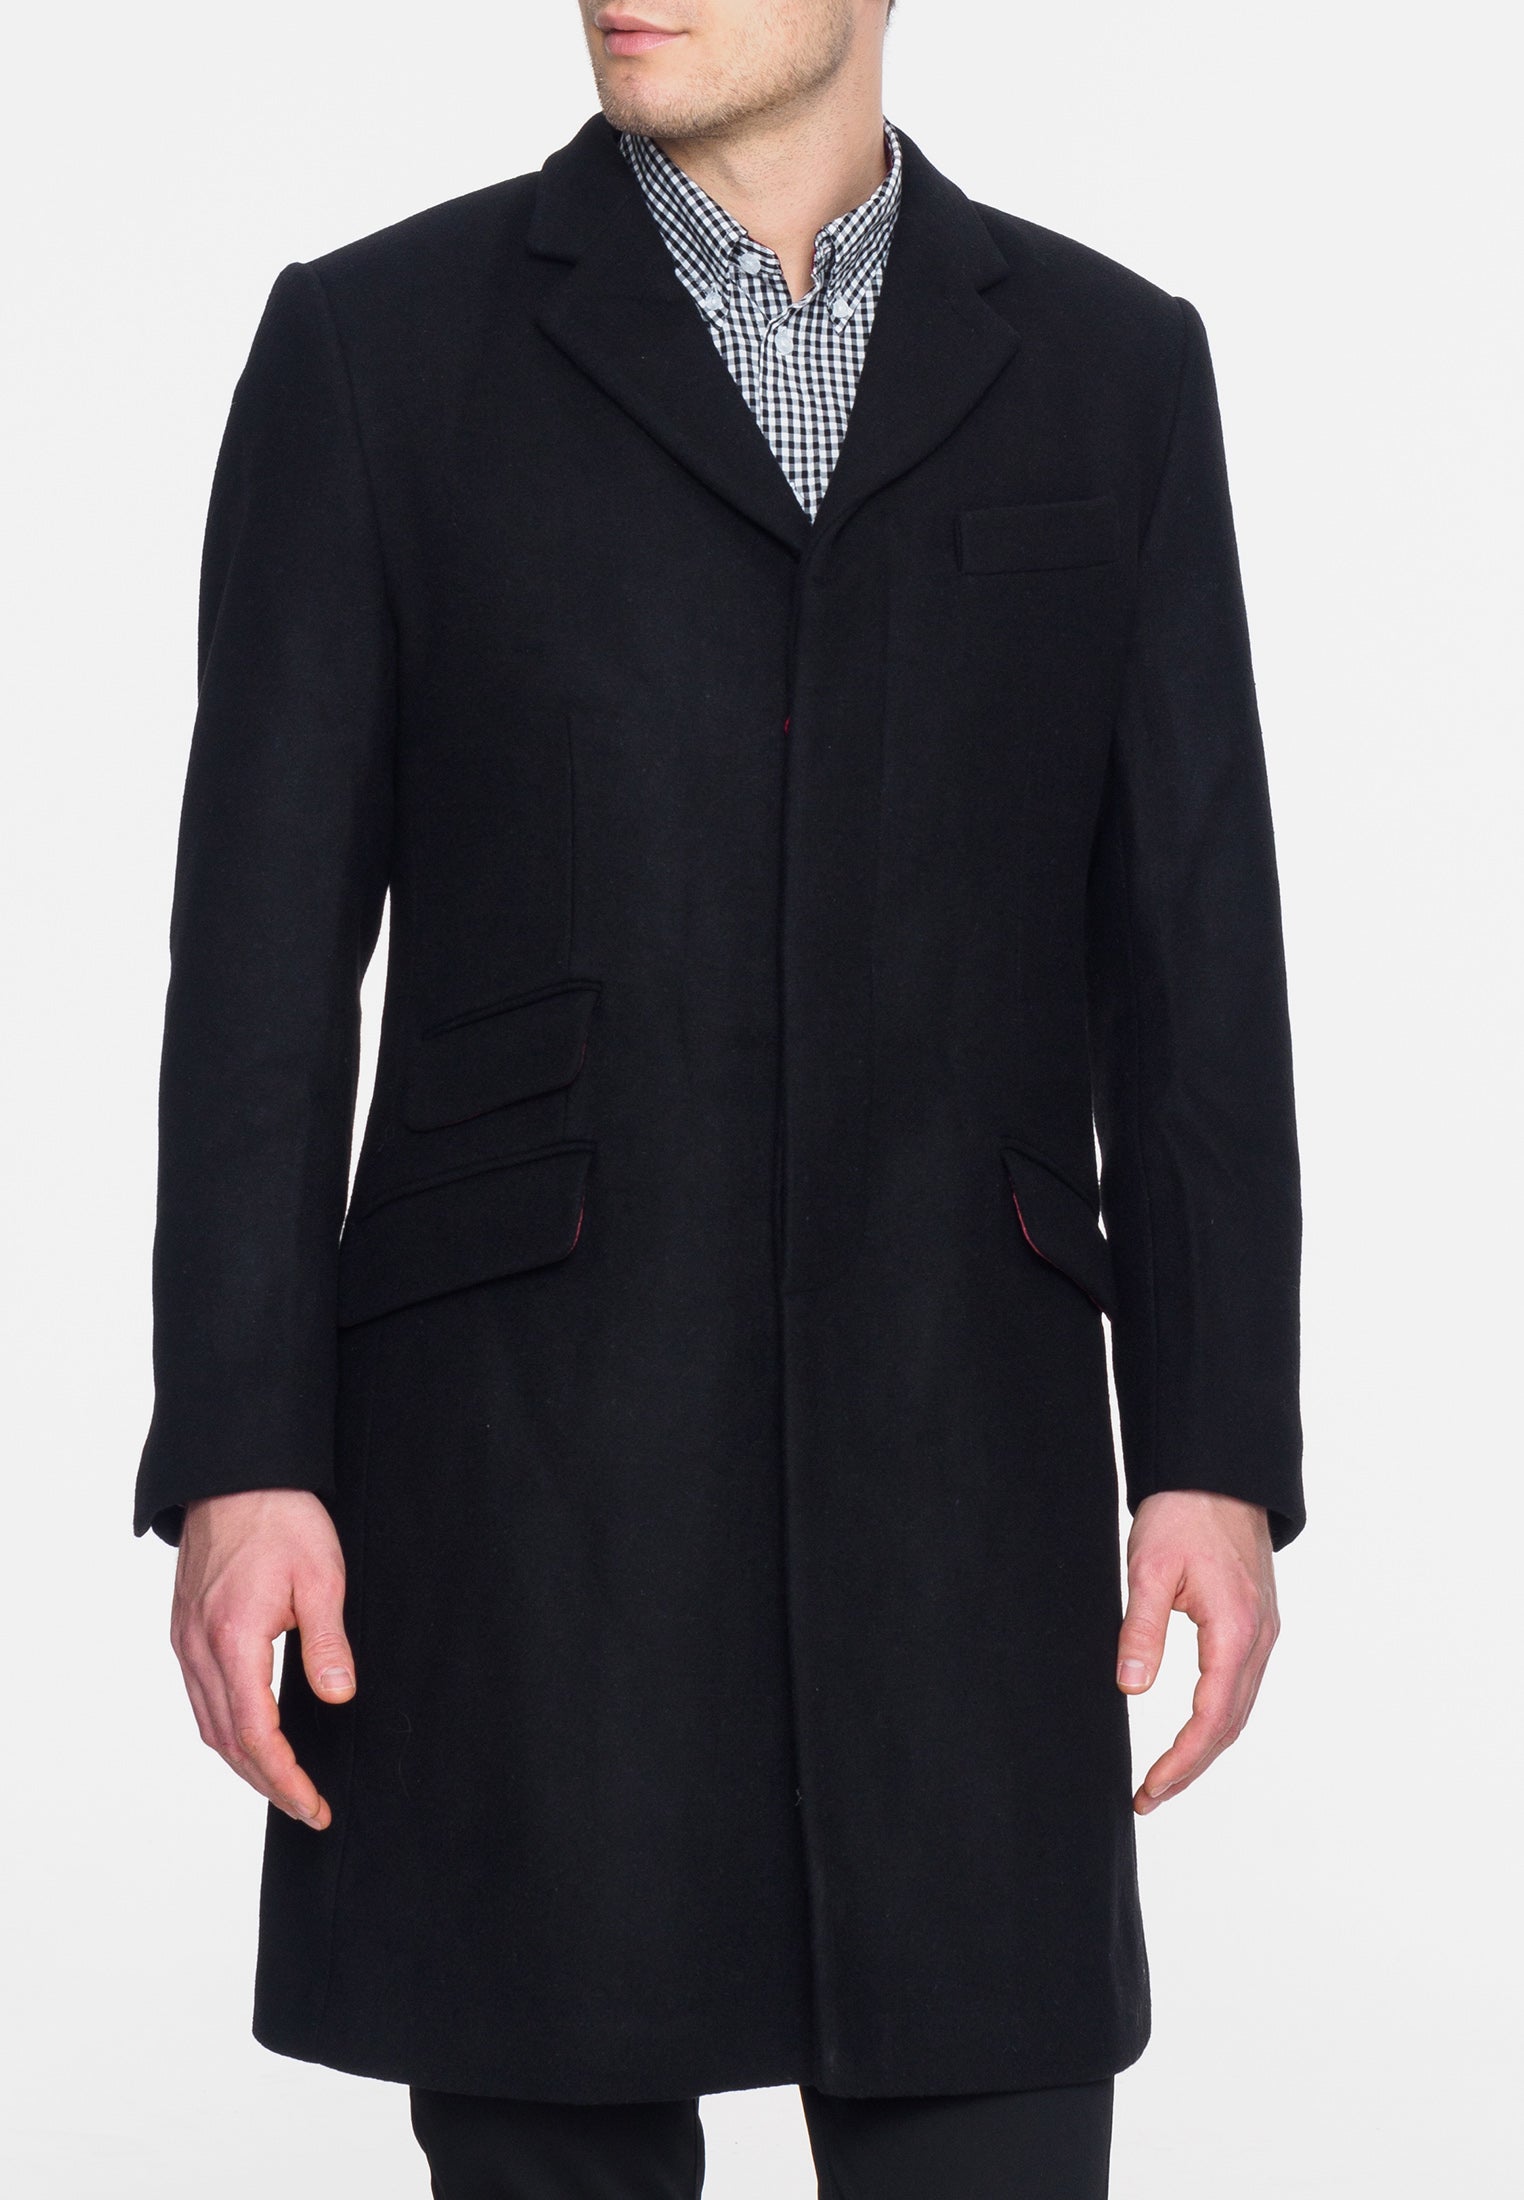 WALESBY Tailored wool overcoat - Merc London